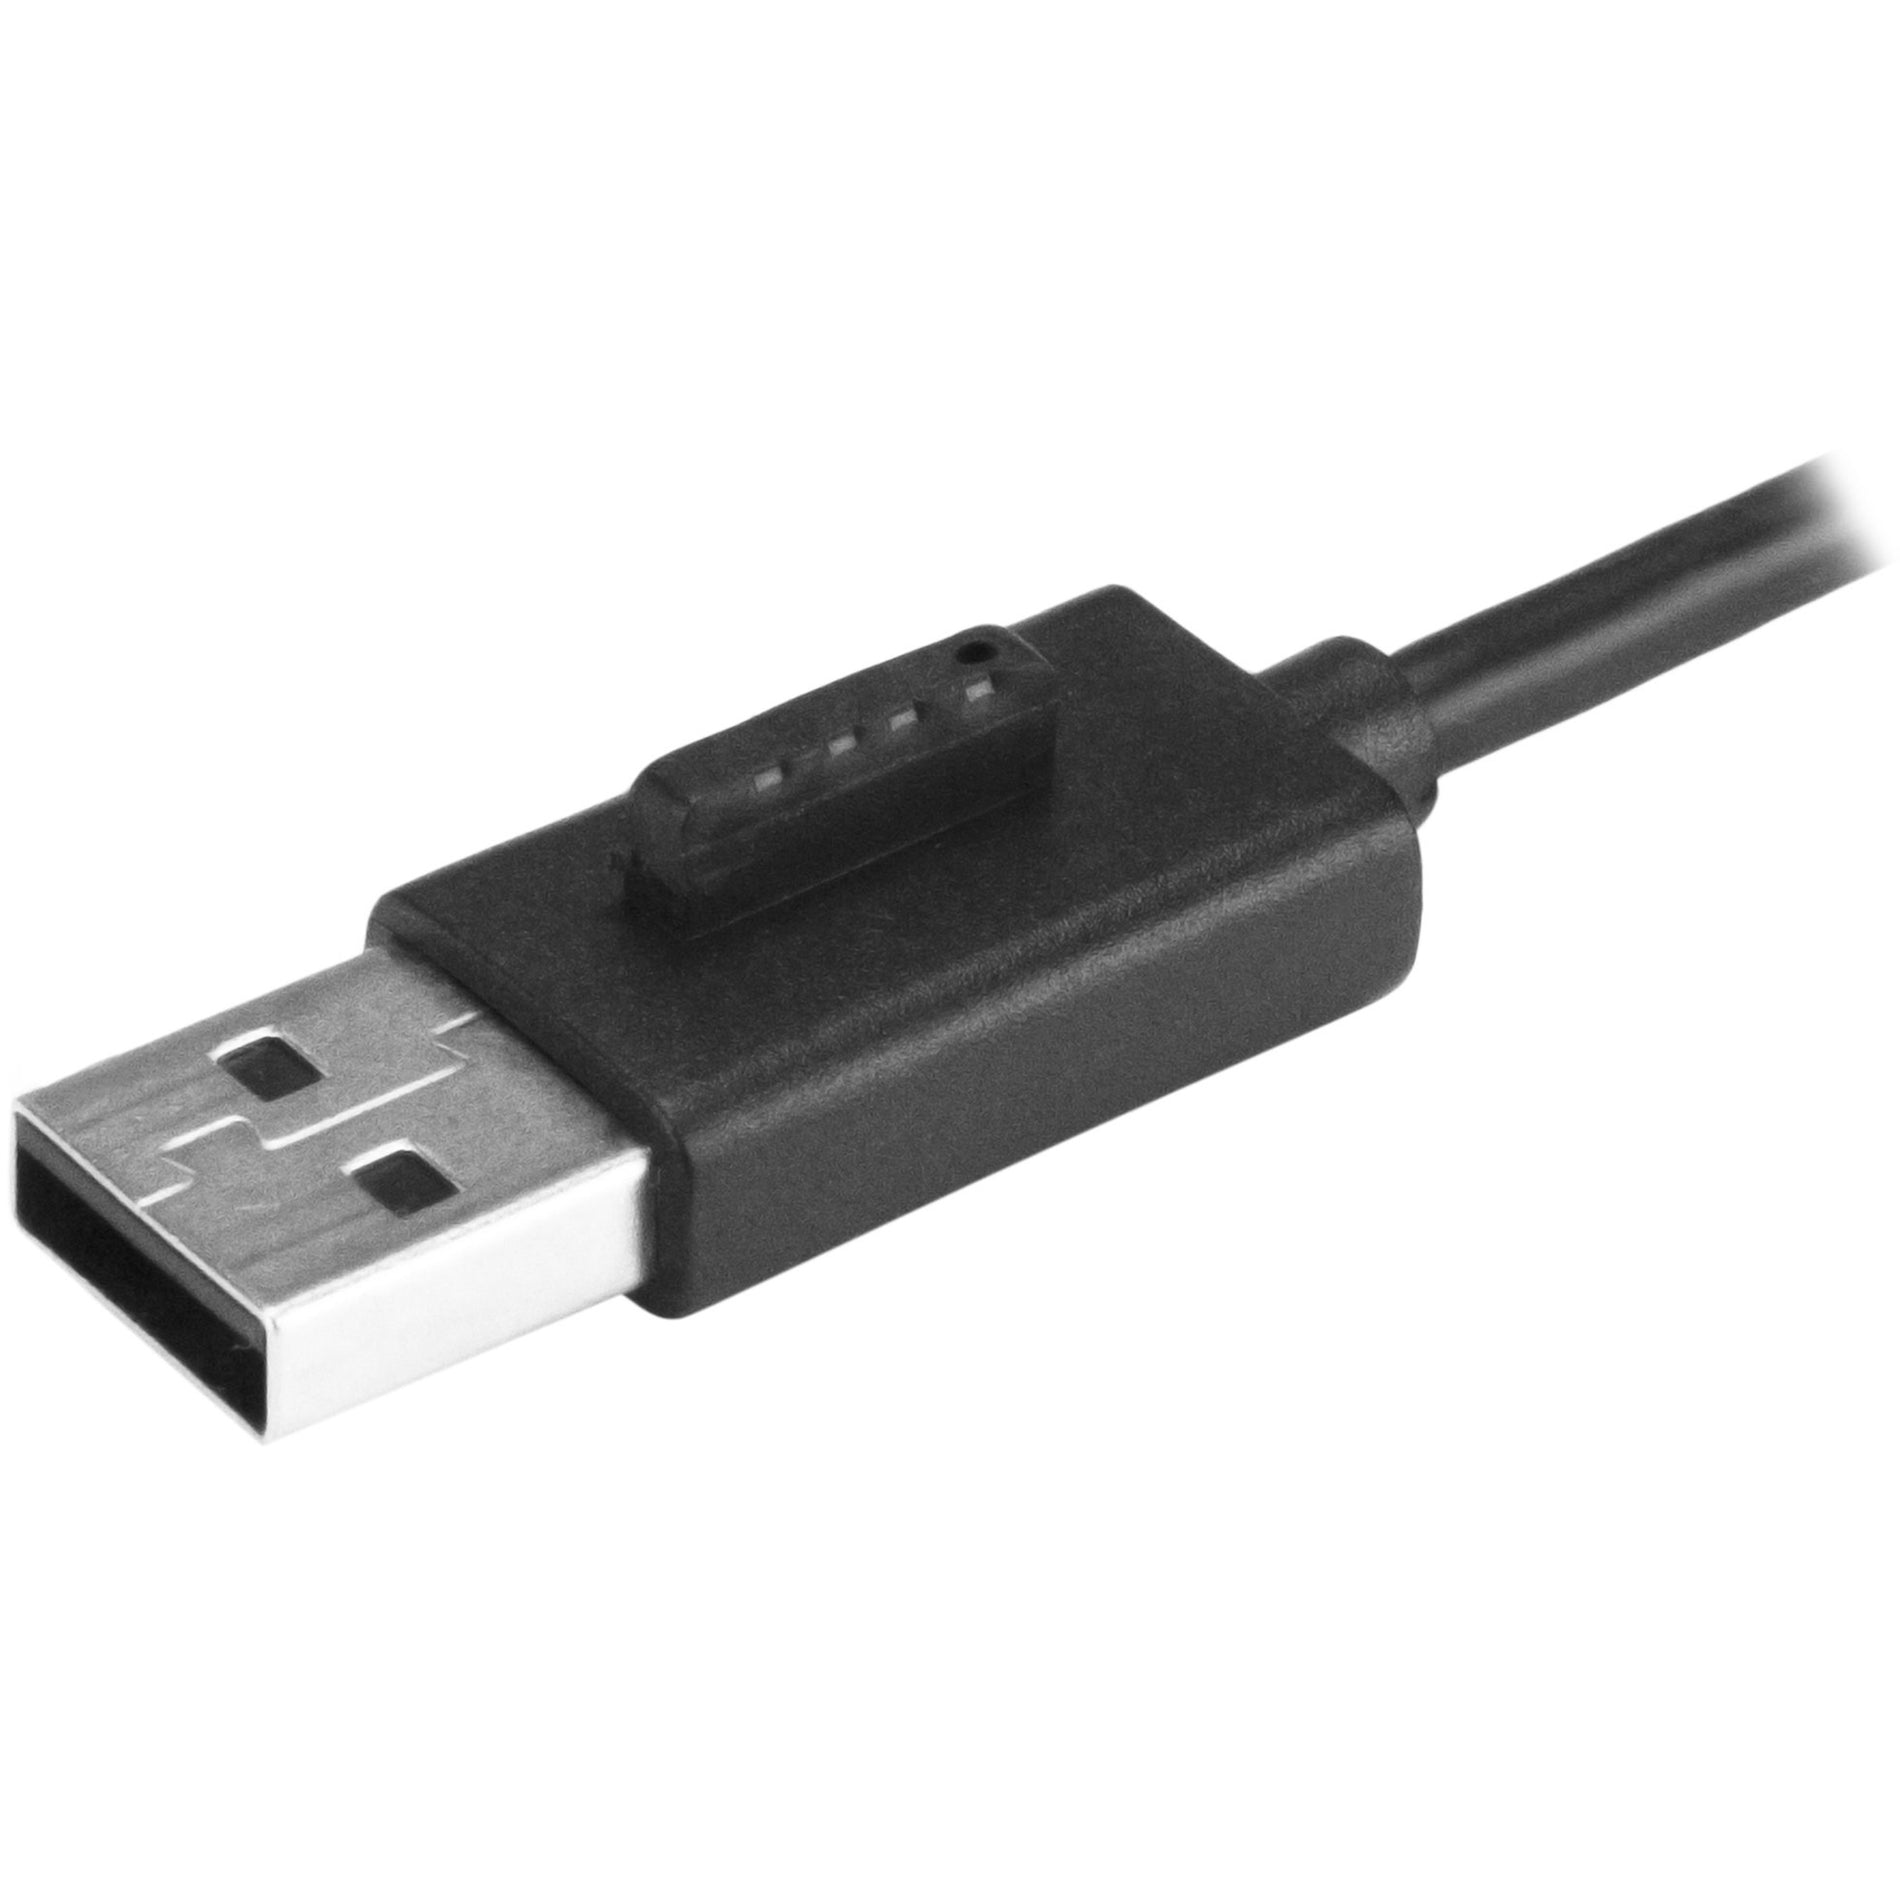 StarTech.com ST4200MINI2 4 Port Portable USB 2.0 Hub with Built-in Cable, Compact Mini USB Hub